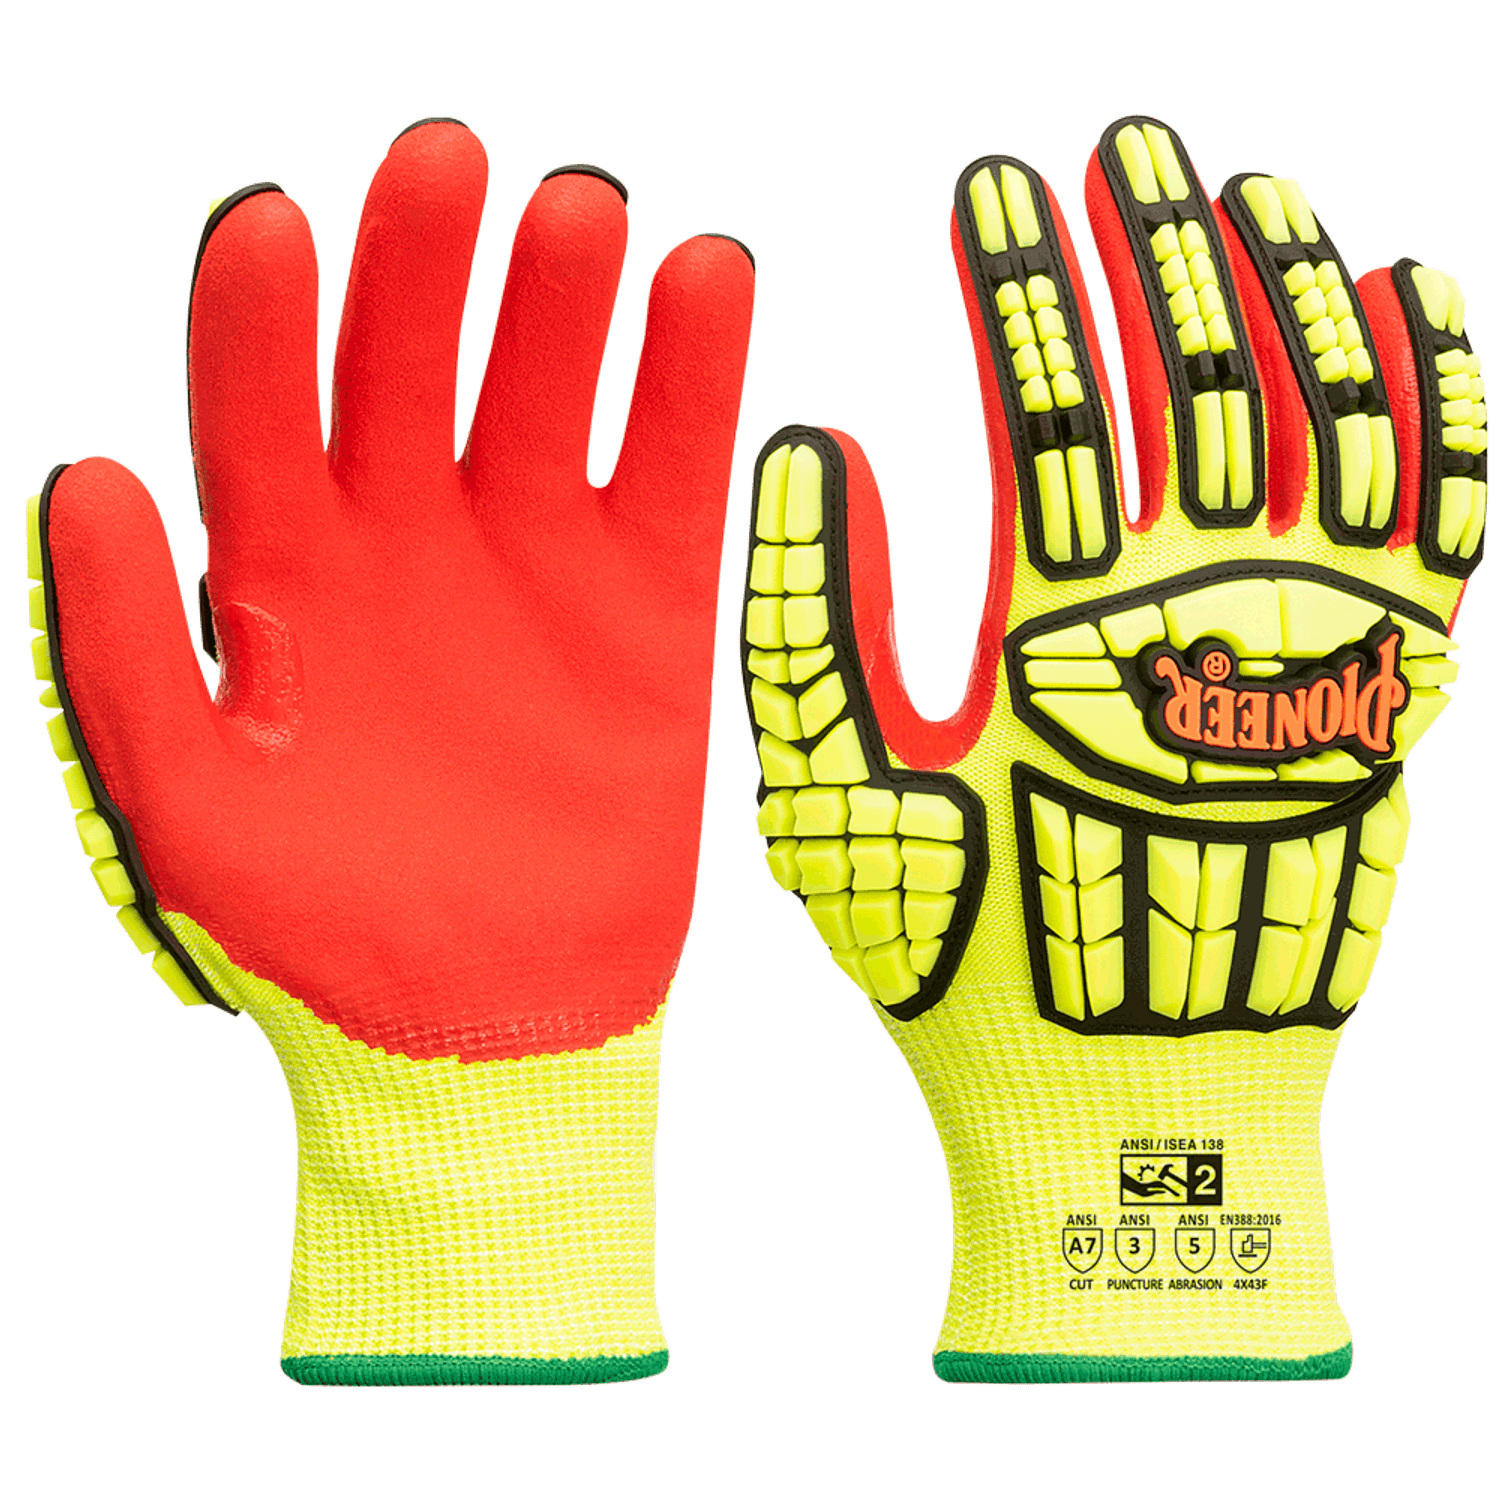 Pioneer 5362 Cut-Resistant Gloves - Level 7